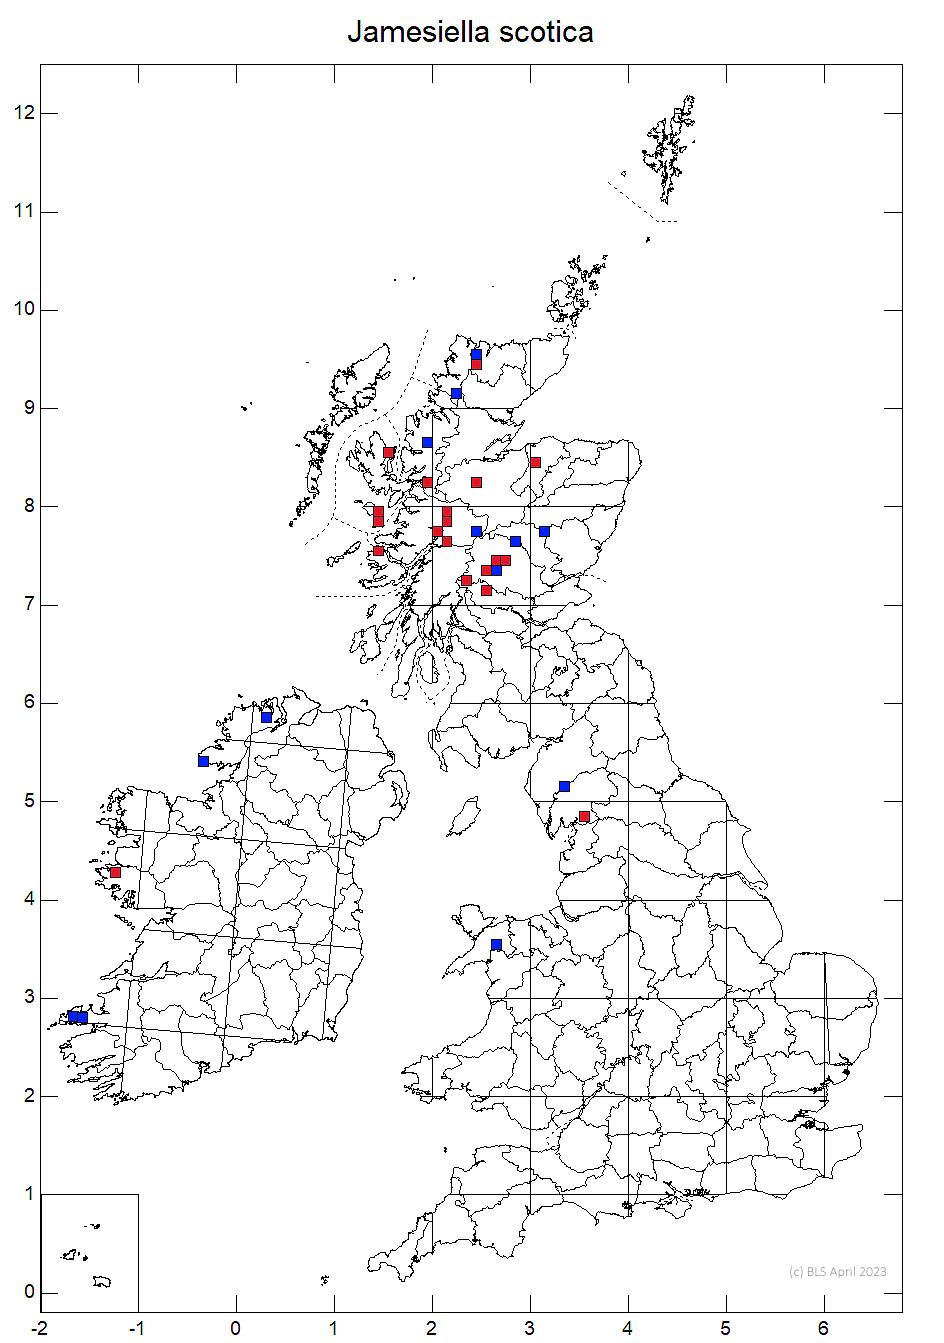 Jamesiella scotica 10km sq distribution map